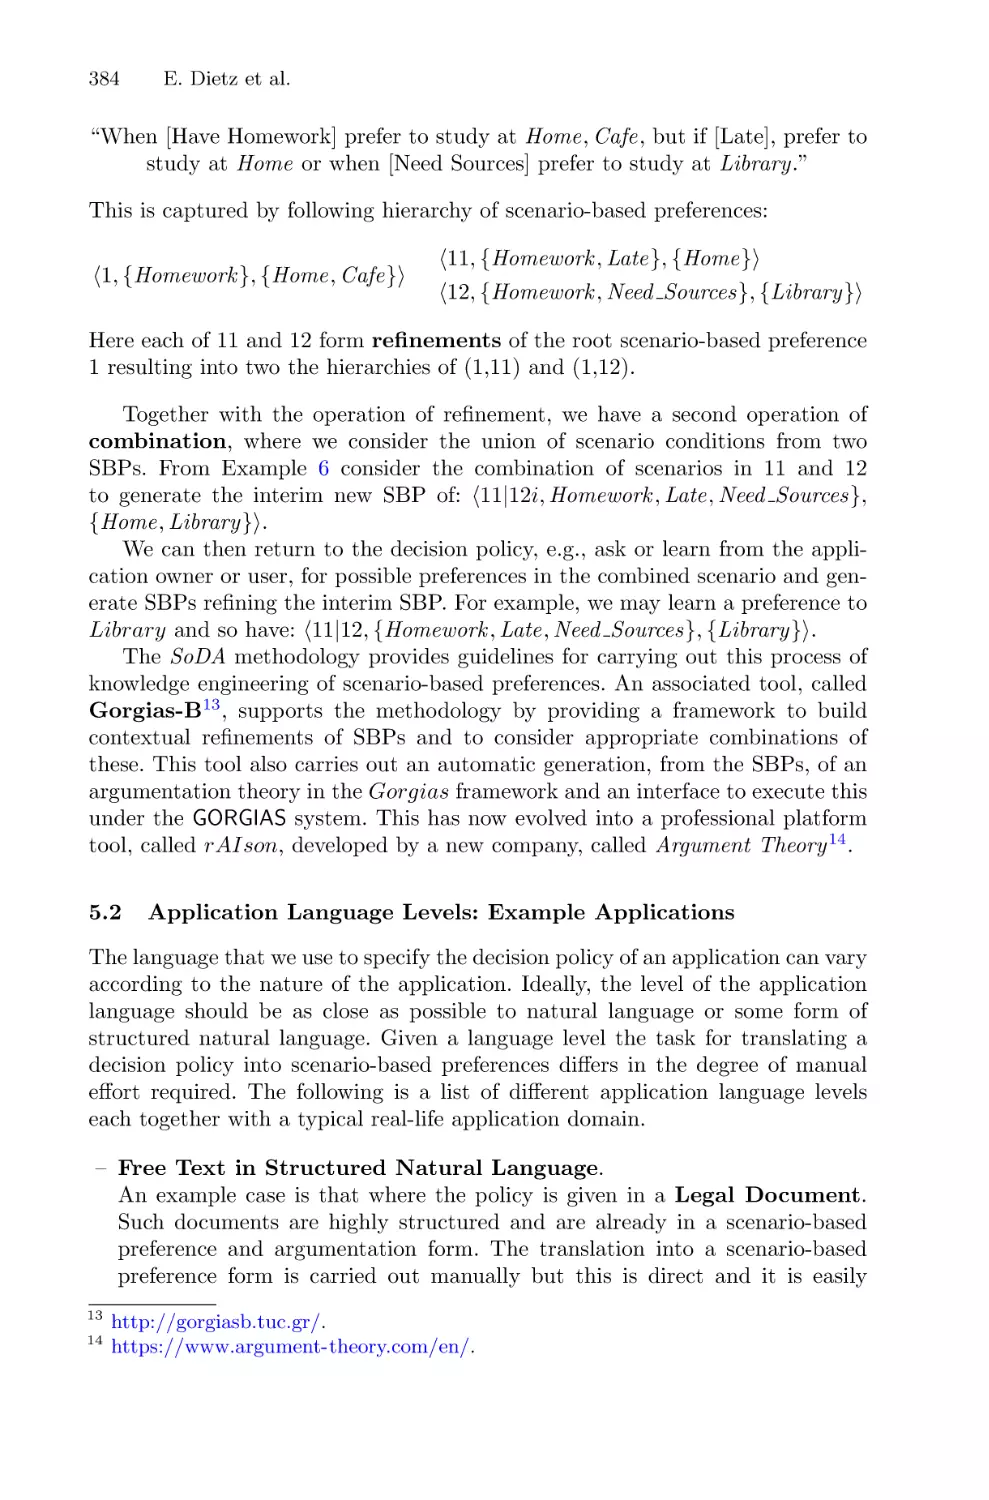 5.2 Application Language Levels